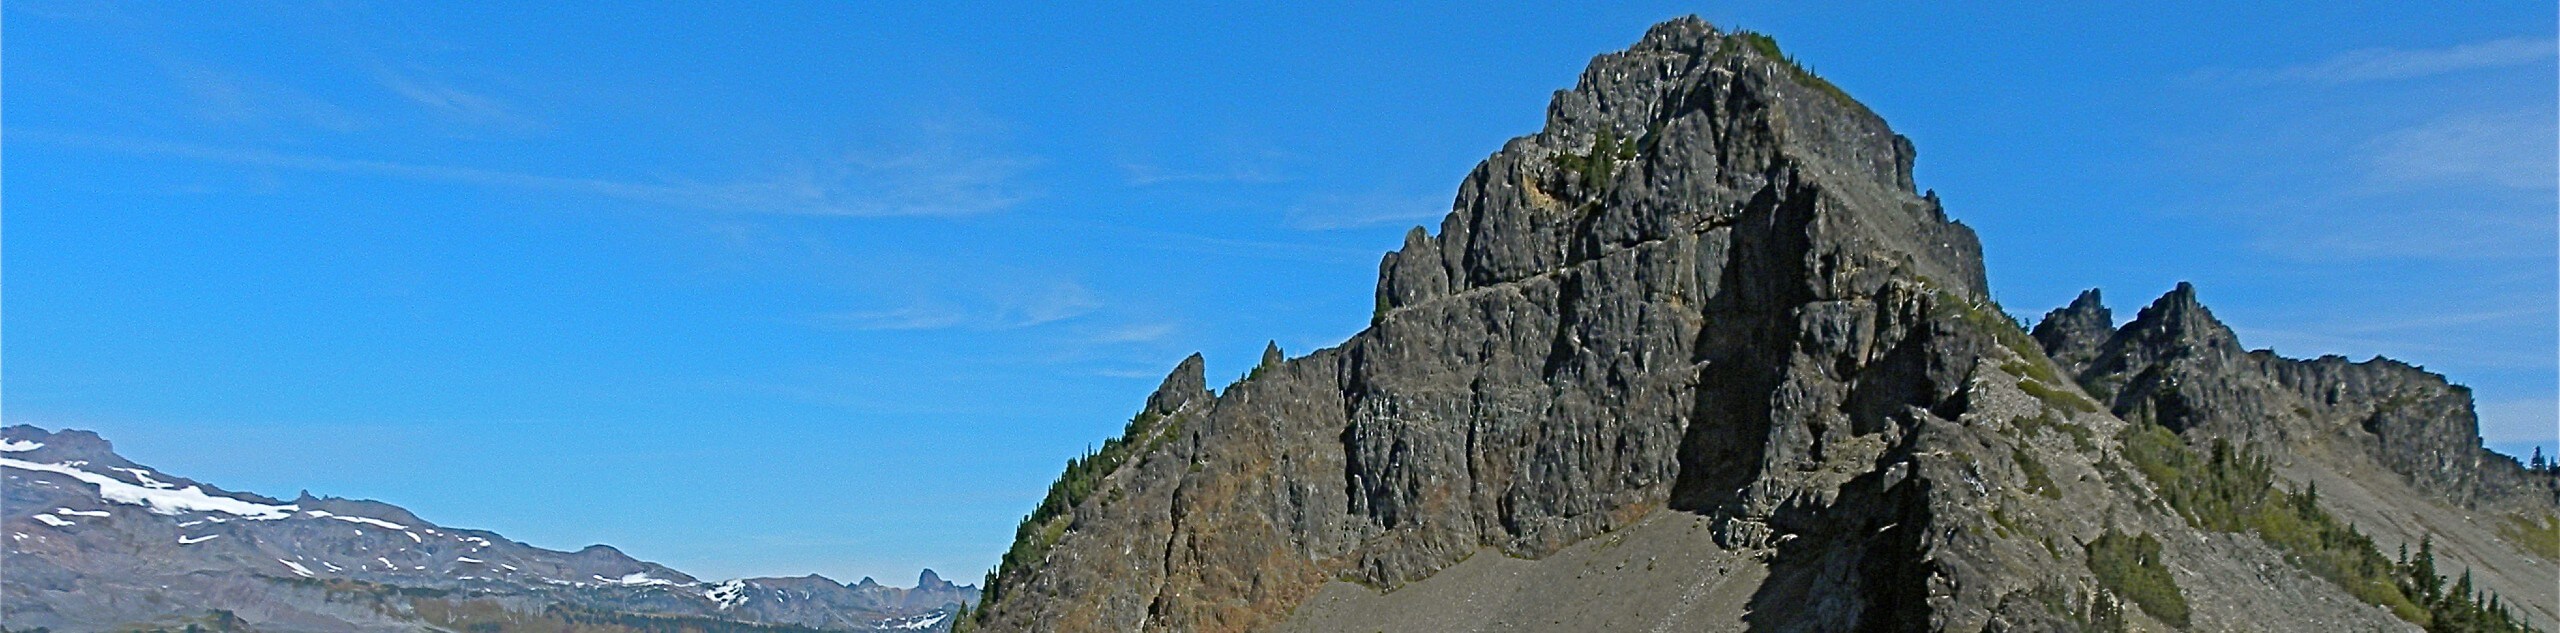 Pinnacle Peak Saddle Trail